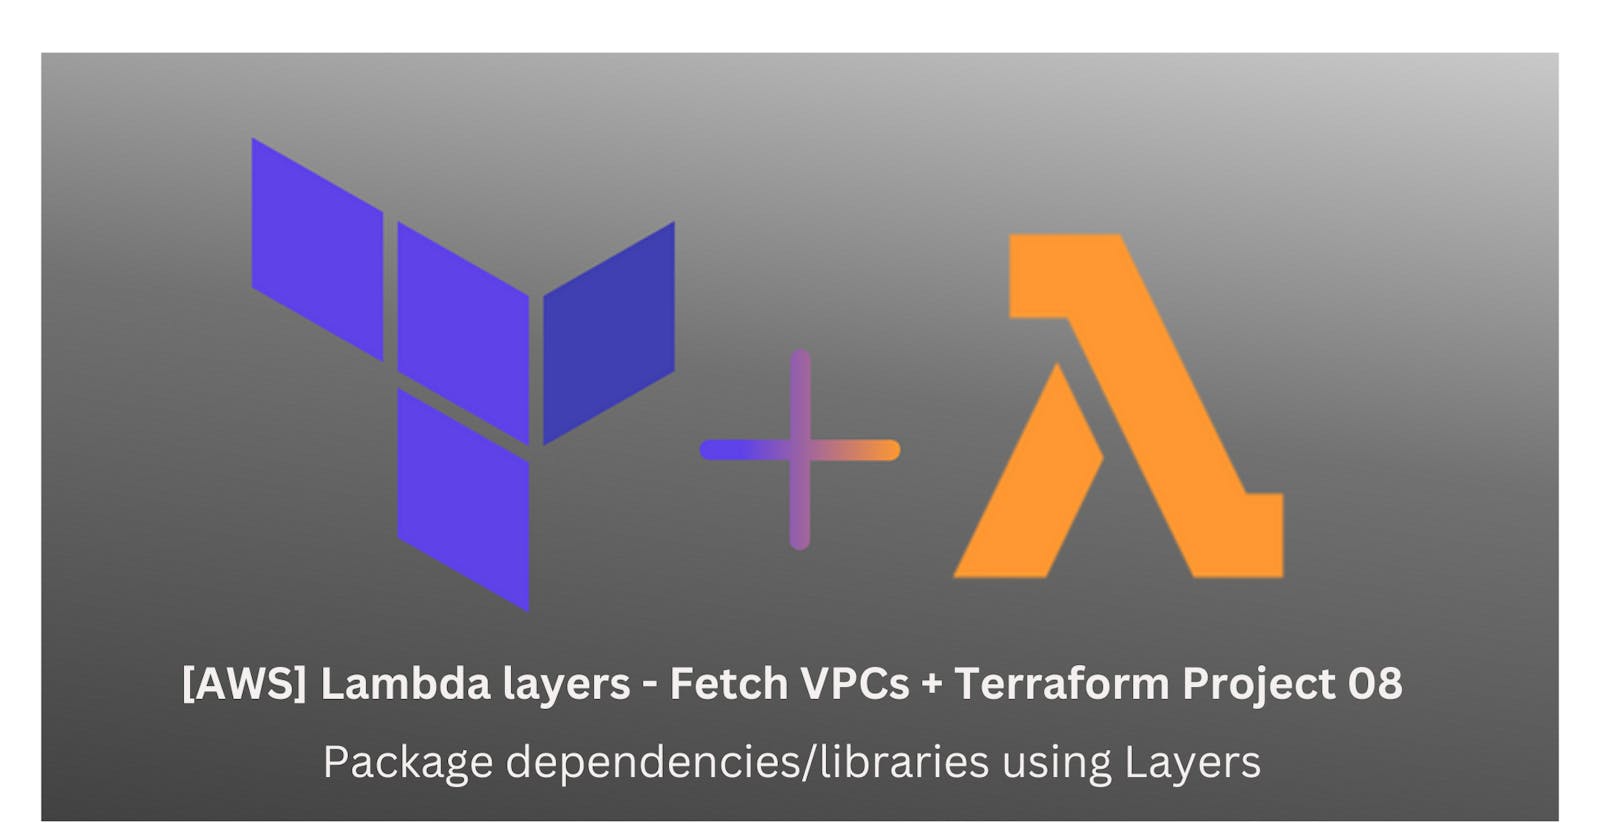 [AWS] Lambda layers - Fetch VPCs + Terraform Project 08